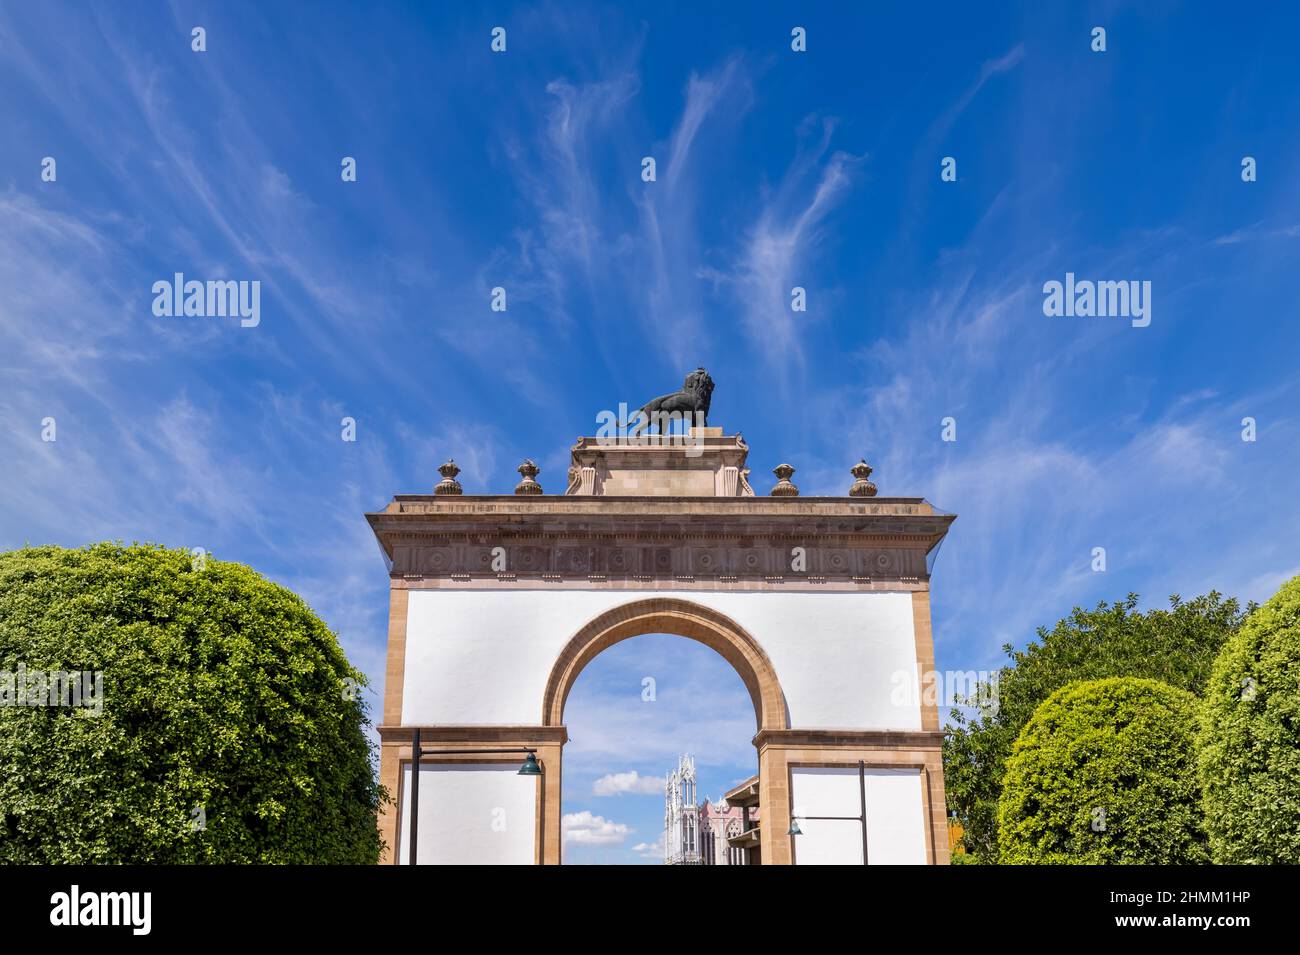 Leon landmark tourist attraction, monument Triumphal Arch of the City of Leon near historic city center. Stock Photo